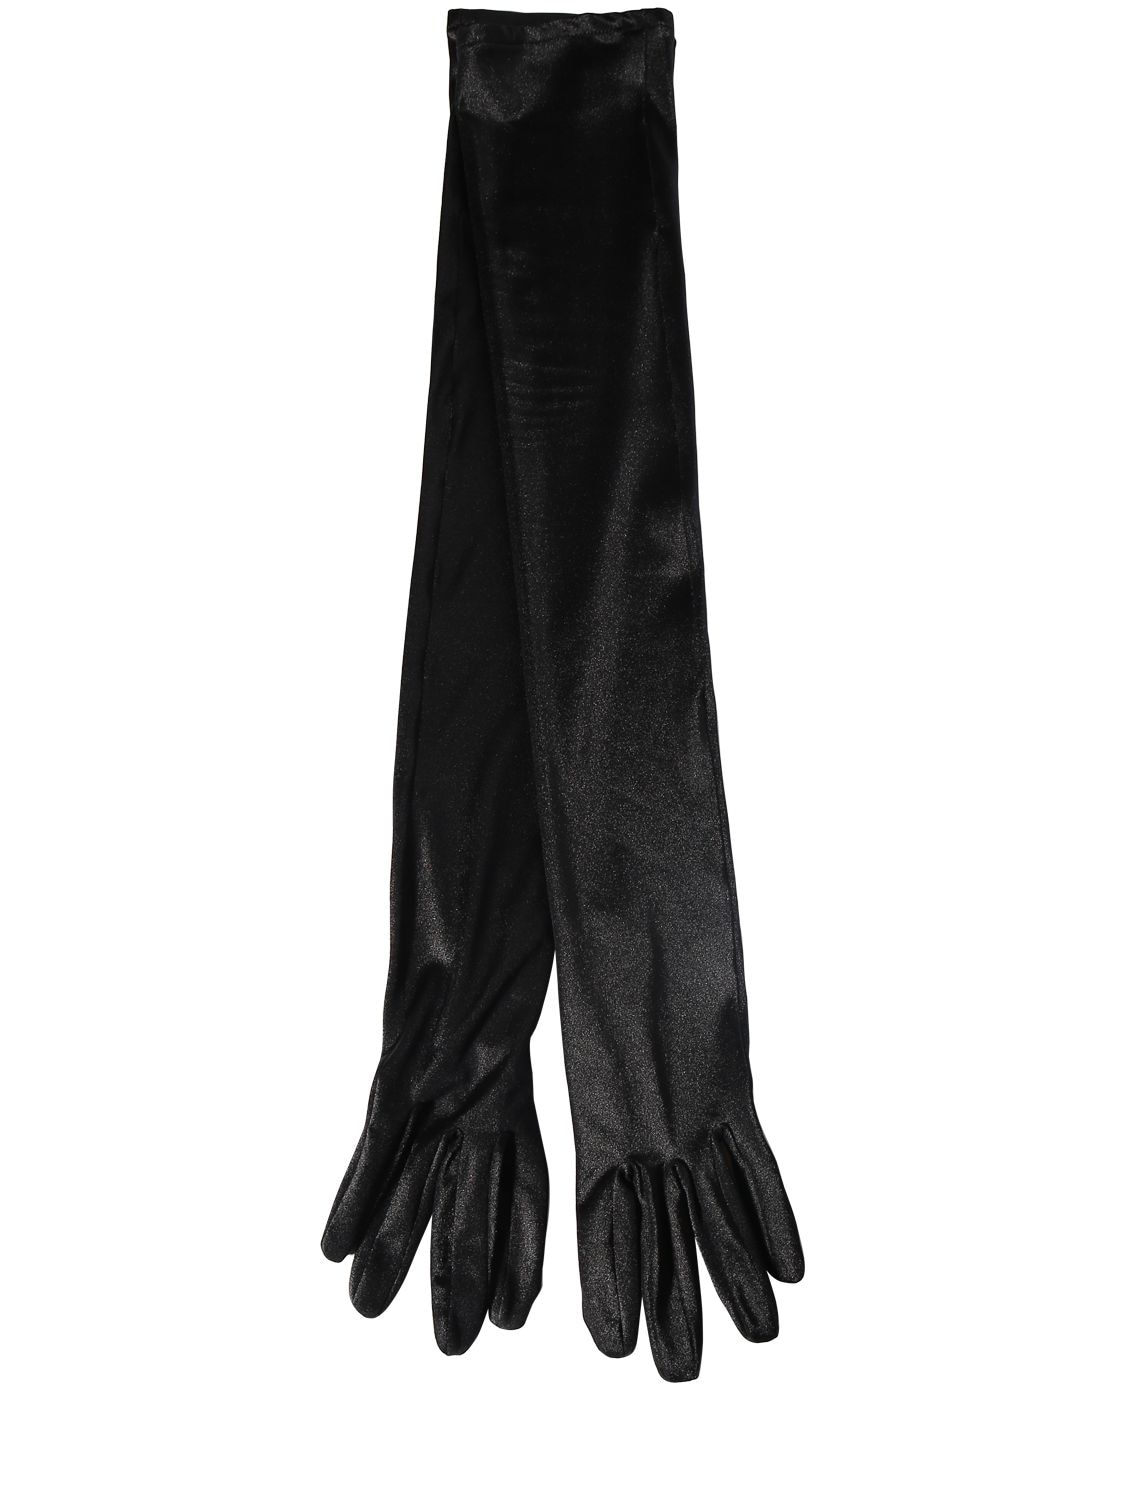 Image of Nylon Blend Extra Long Gloves